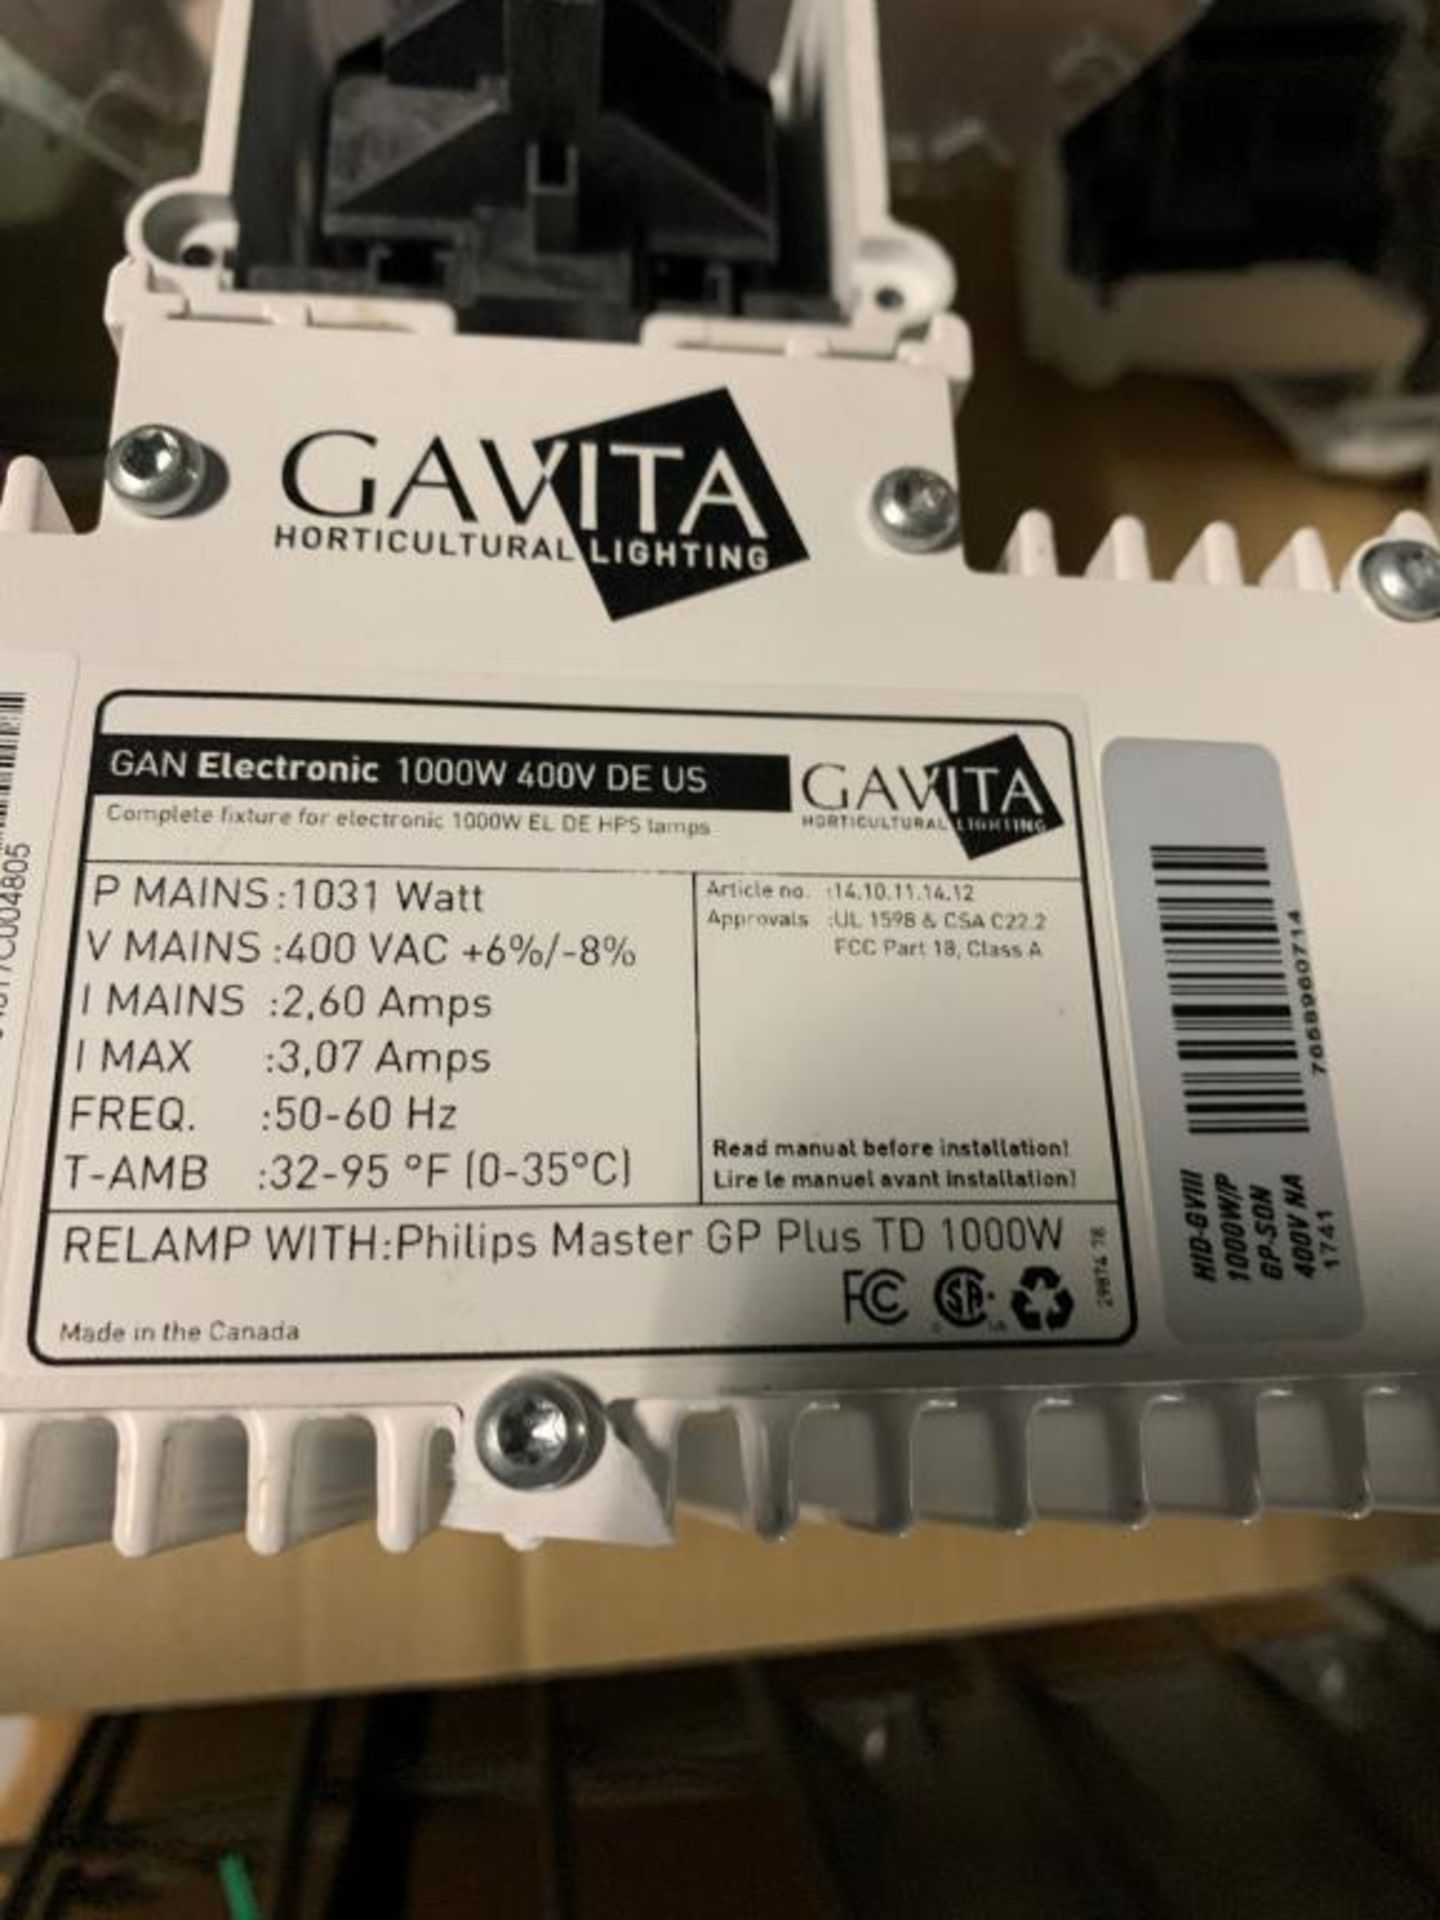 Gavita Grow Lights - Image 2 of 3